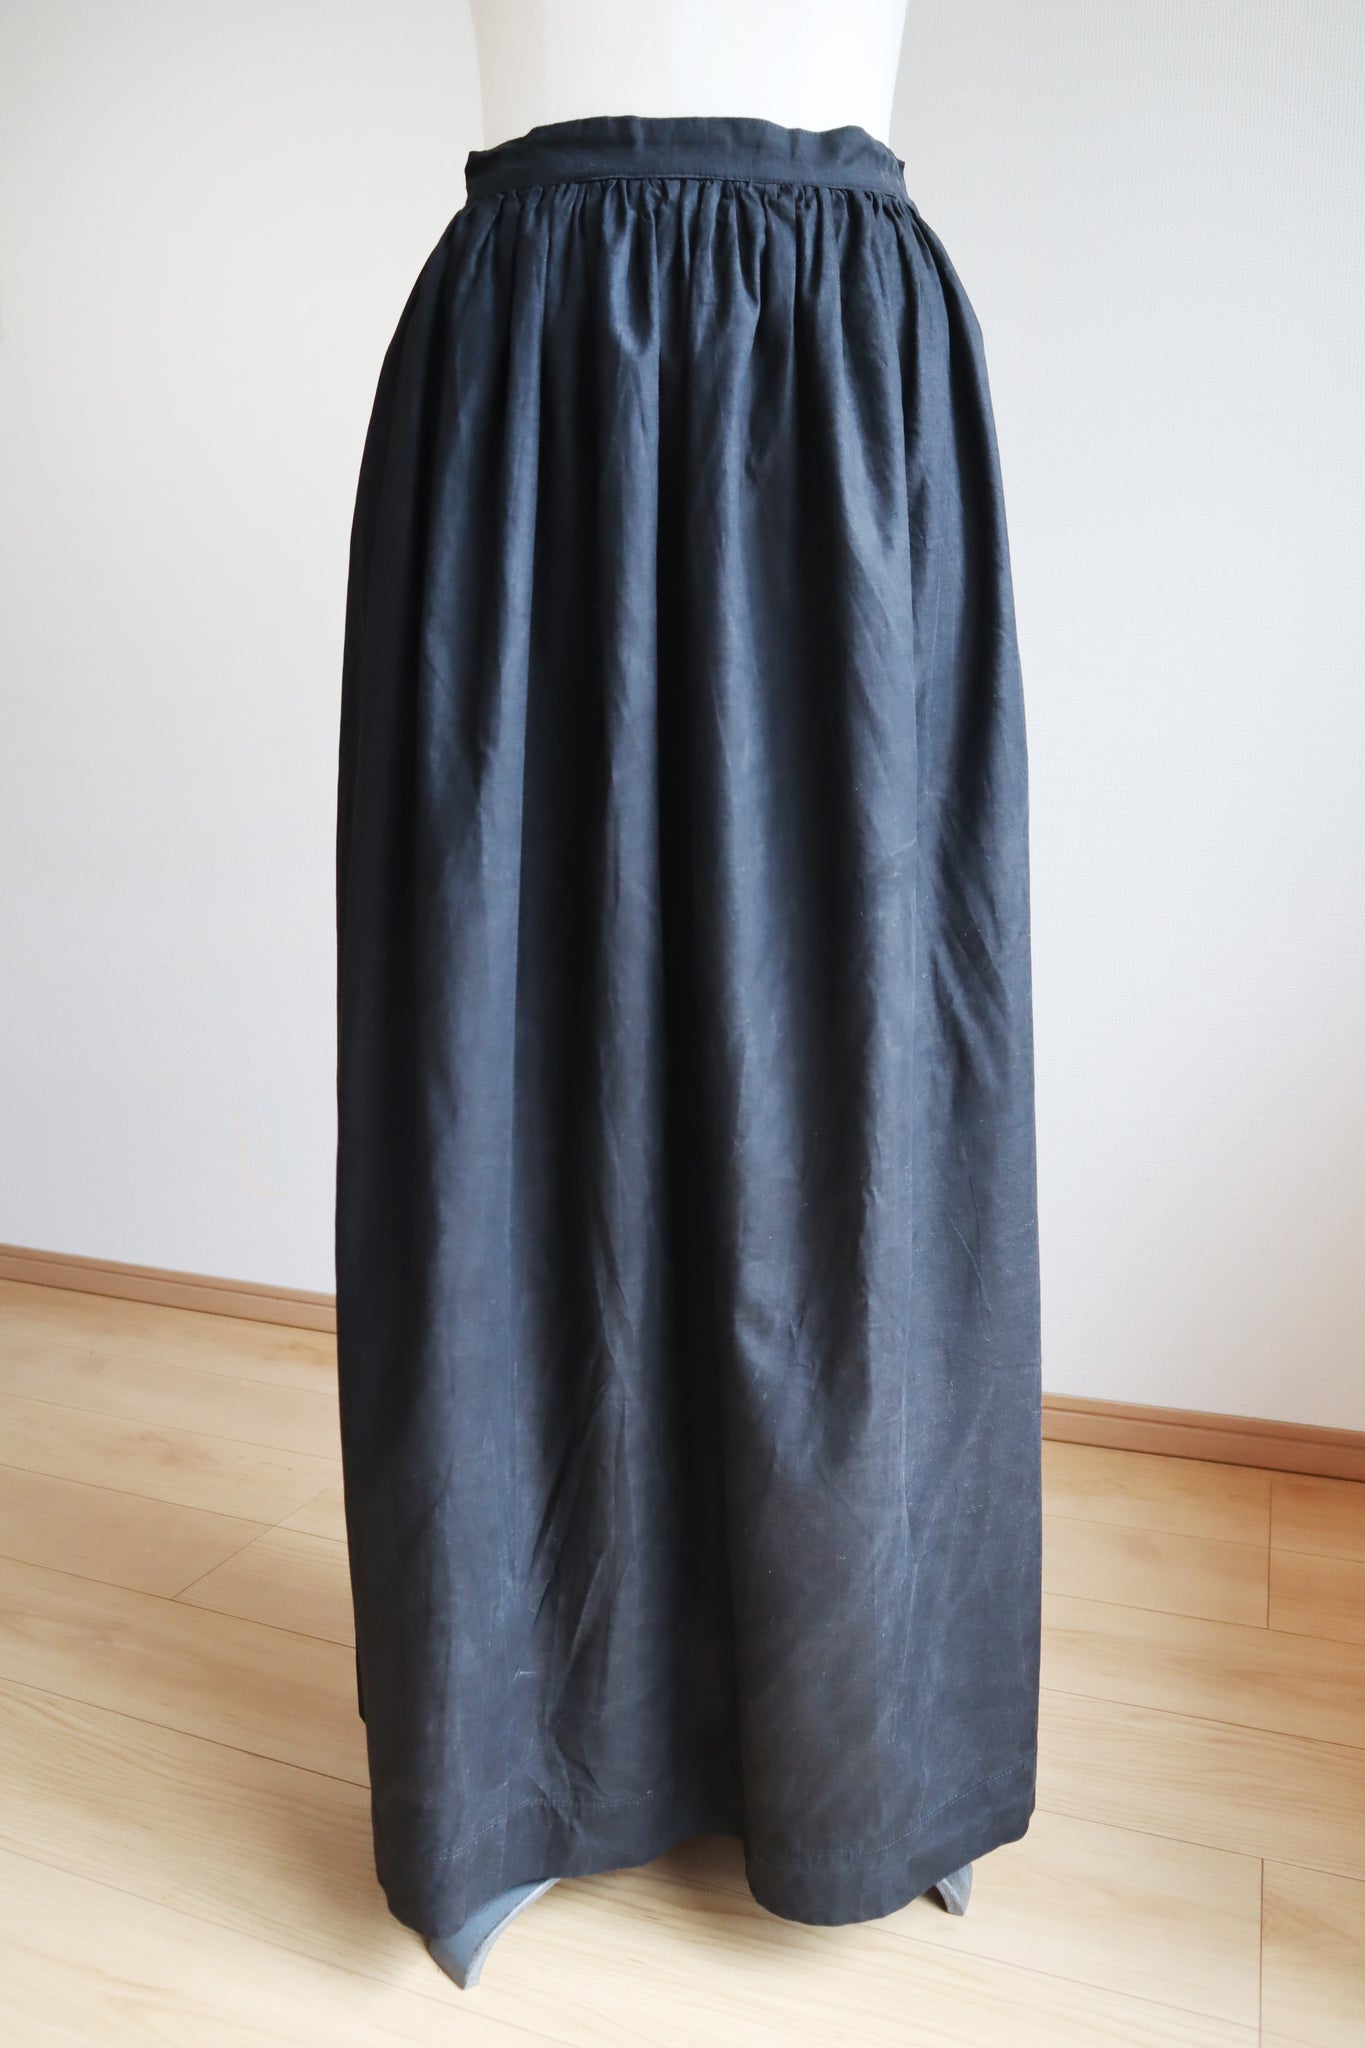 1900s Edwardian Black Cotton Petticoat Skirt